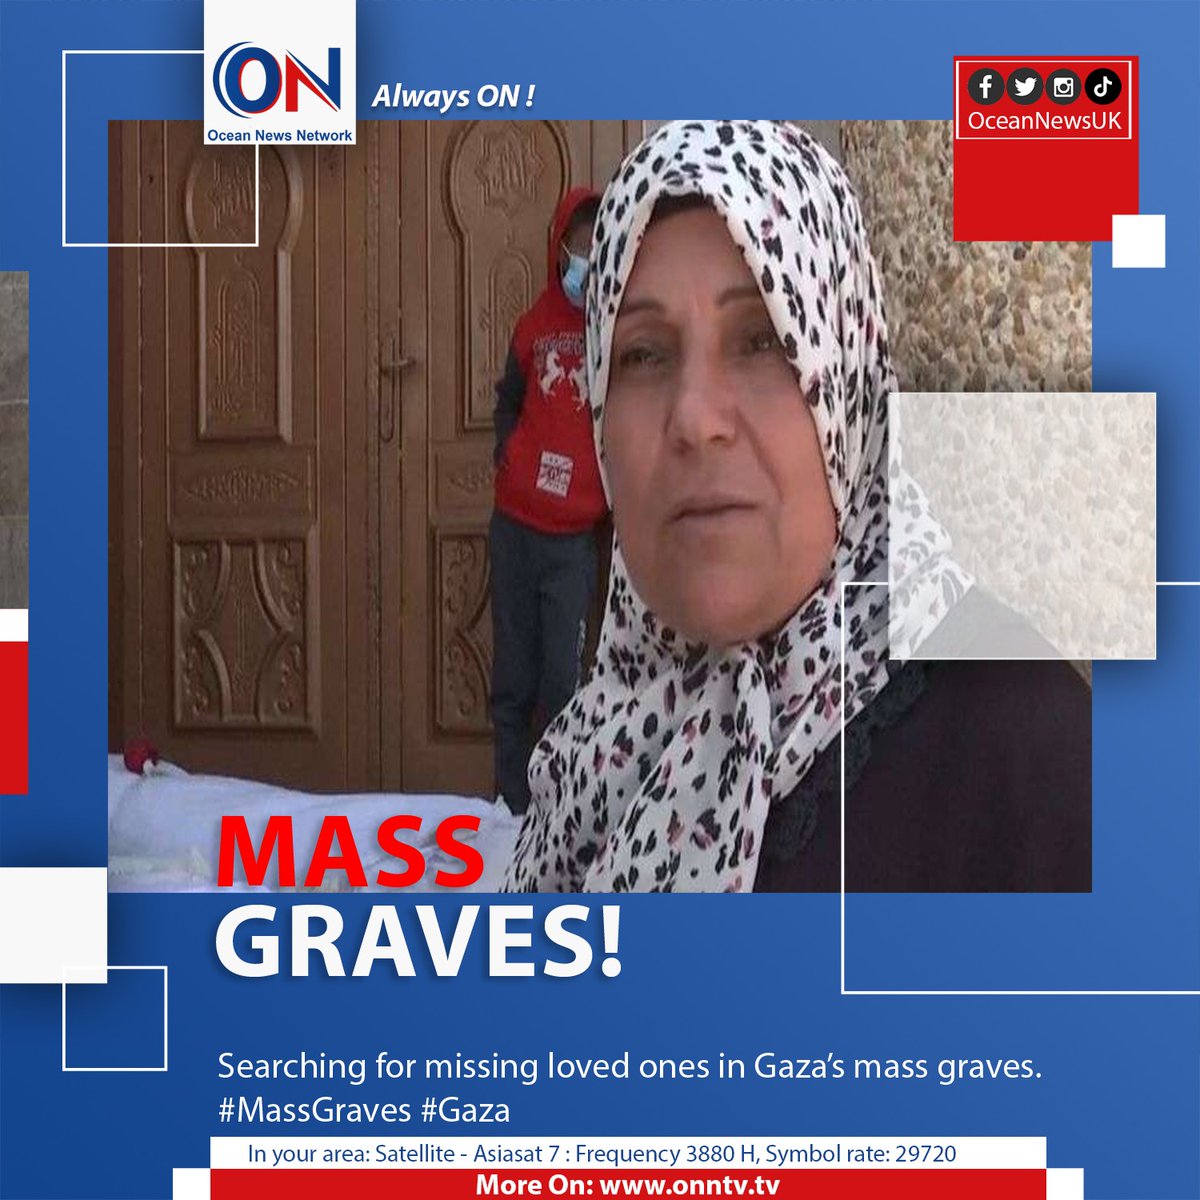 Searching for missing loved ones in Gaza’s mass graves. #MassGraves #Gaza

#OceanNewsUK #UK #Ocean #breaking #latest #London

More On: oceannewsuk.com

📺 Satellite - Asiasat7: Frequency 3880 H, Symbol Rate: 29720